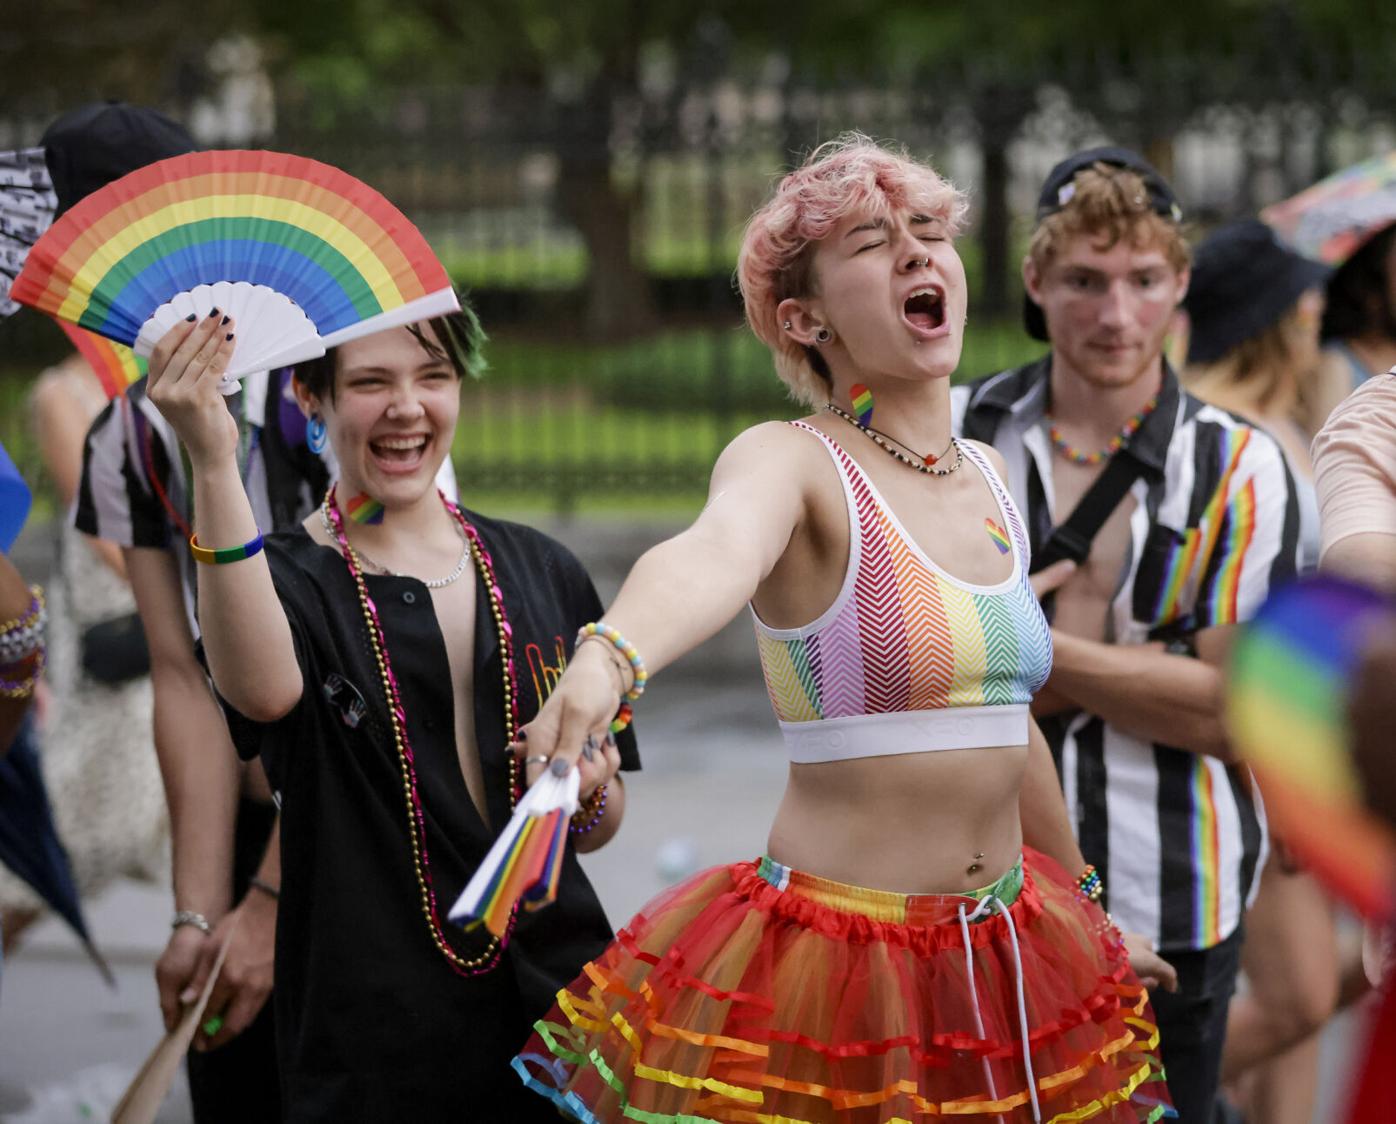 This School Had an 'Among Us' Pride Costume?